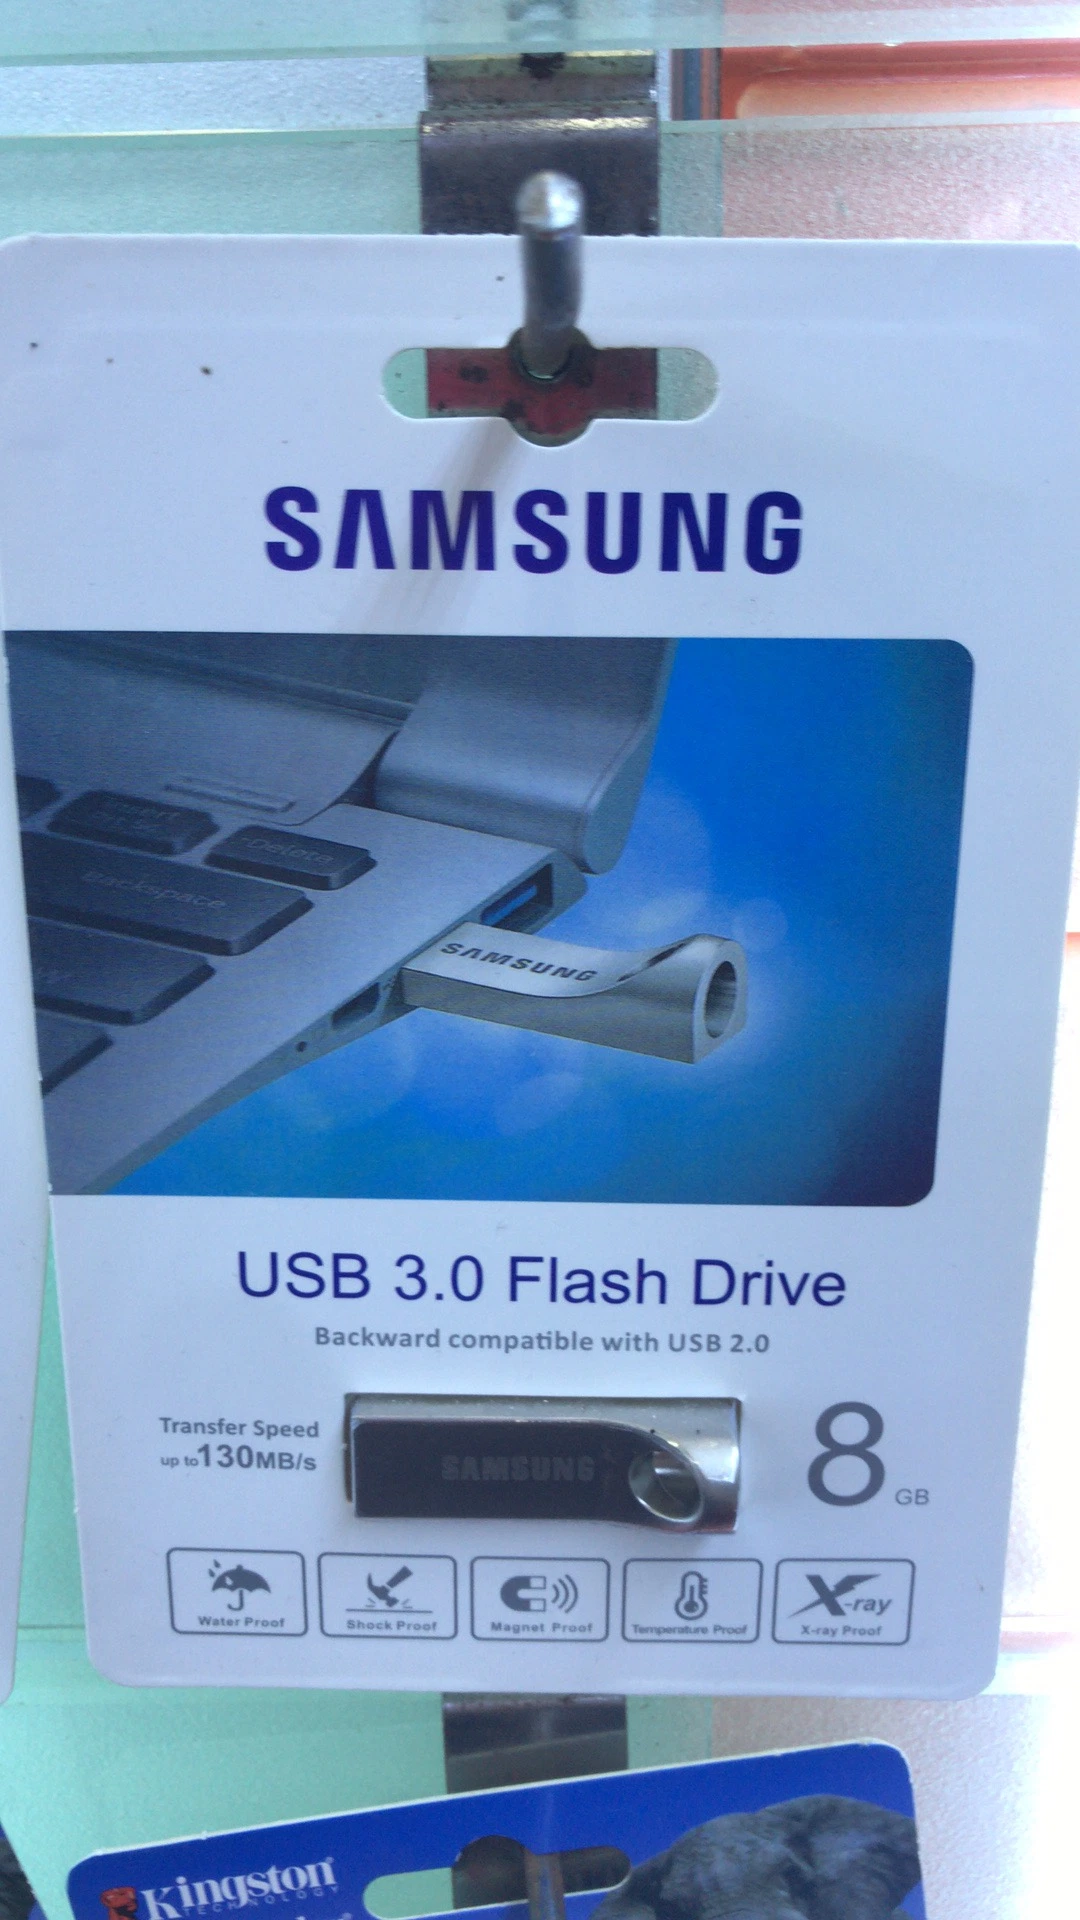 Flash Drive for 8GB-256GB Photo Stick for iPhone USB Storage Lomygus USB Flash Drive Compatible iPhone iPad Ios MacBook Android